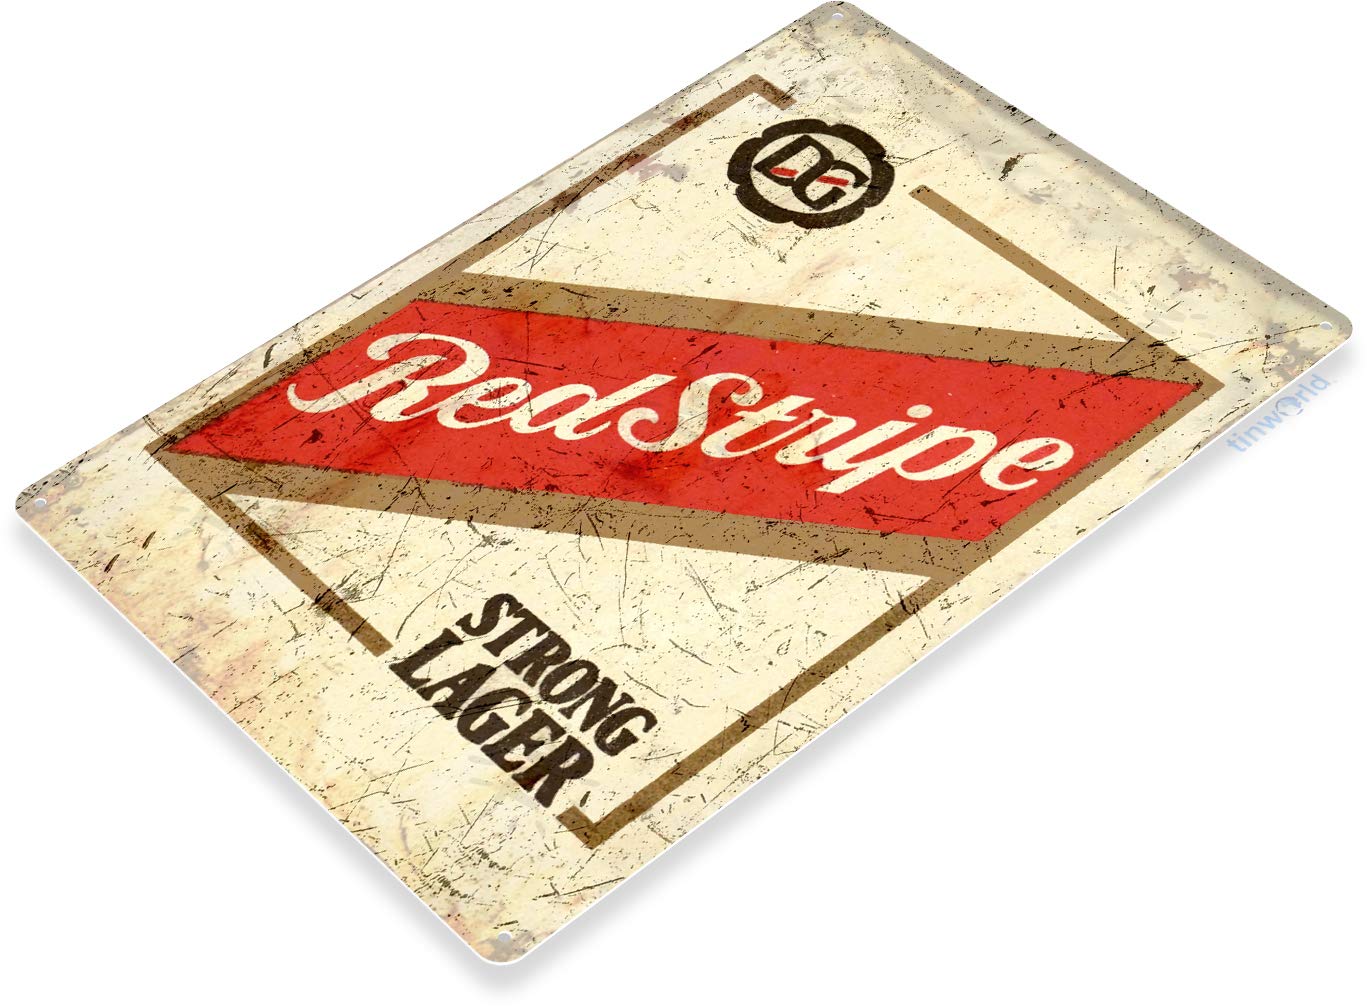 Red Stripe Beer Logo - Amazon.com: Tinworld TIN Sign “Red Stripe Beer Old” Lager Metal ...